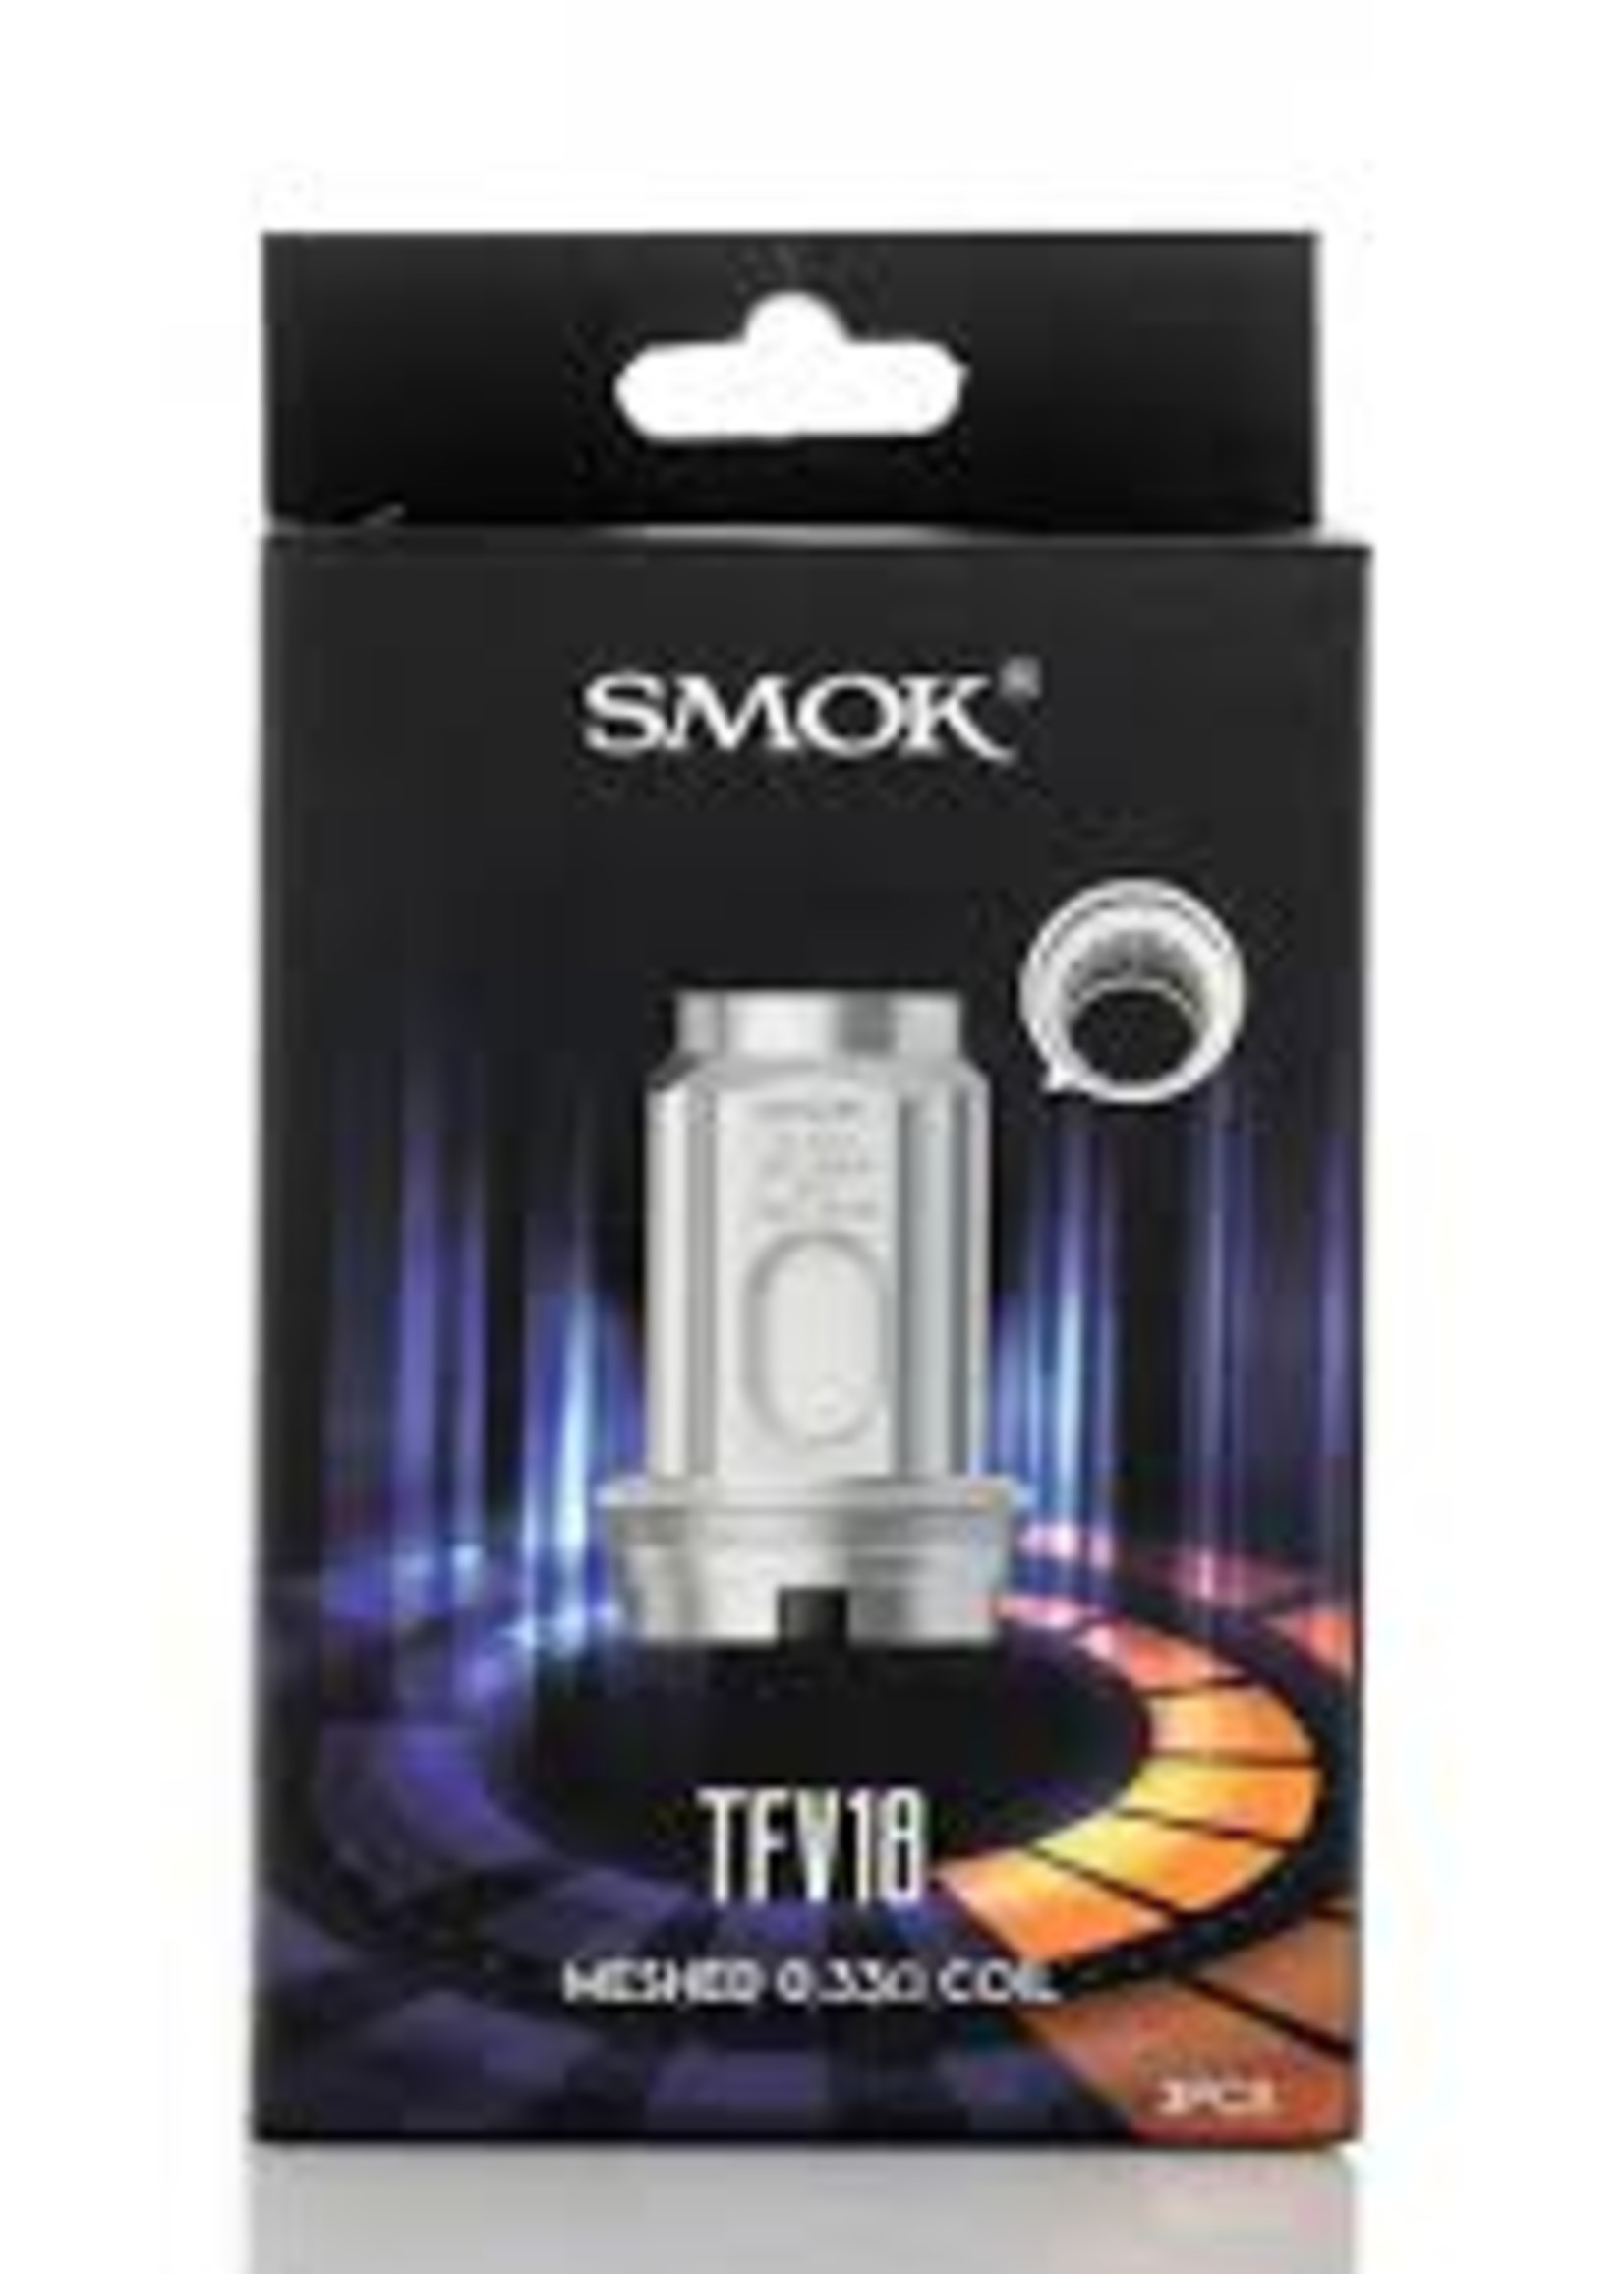 Smok SMOK TFV18 Replacement Coils - Pack of 3 - Dual Mesh 0.15 ohm